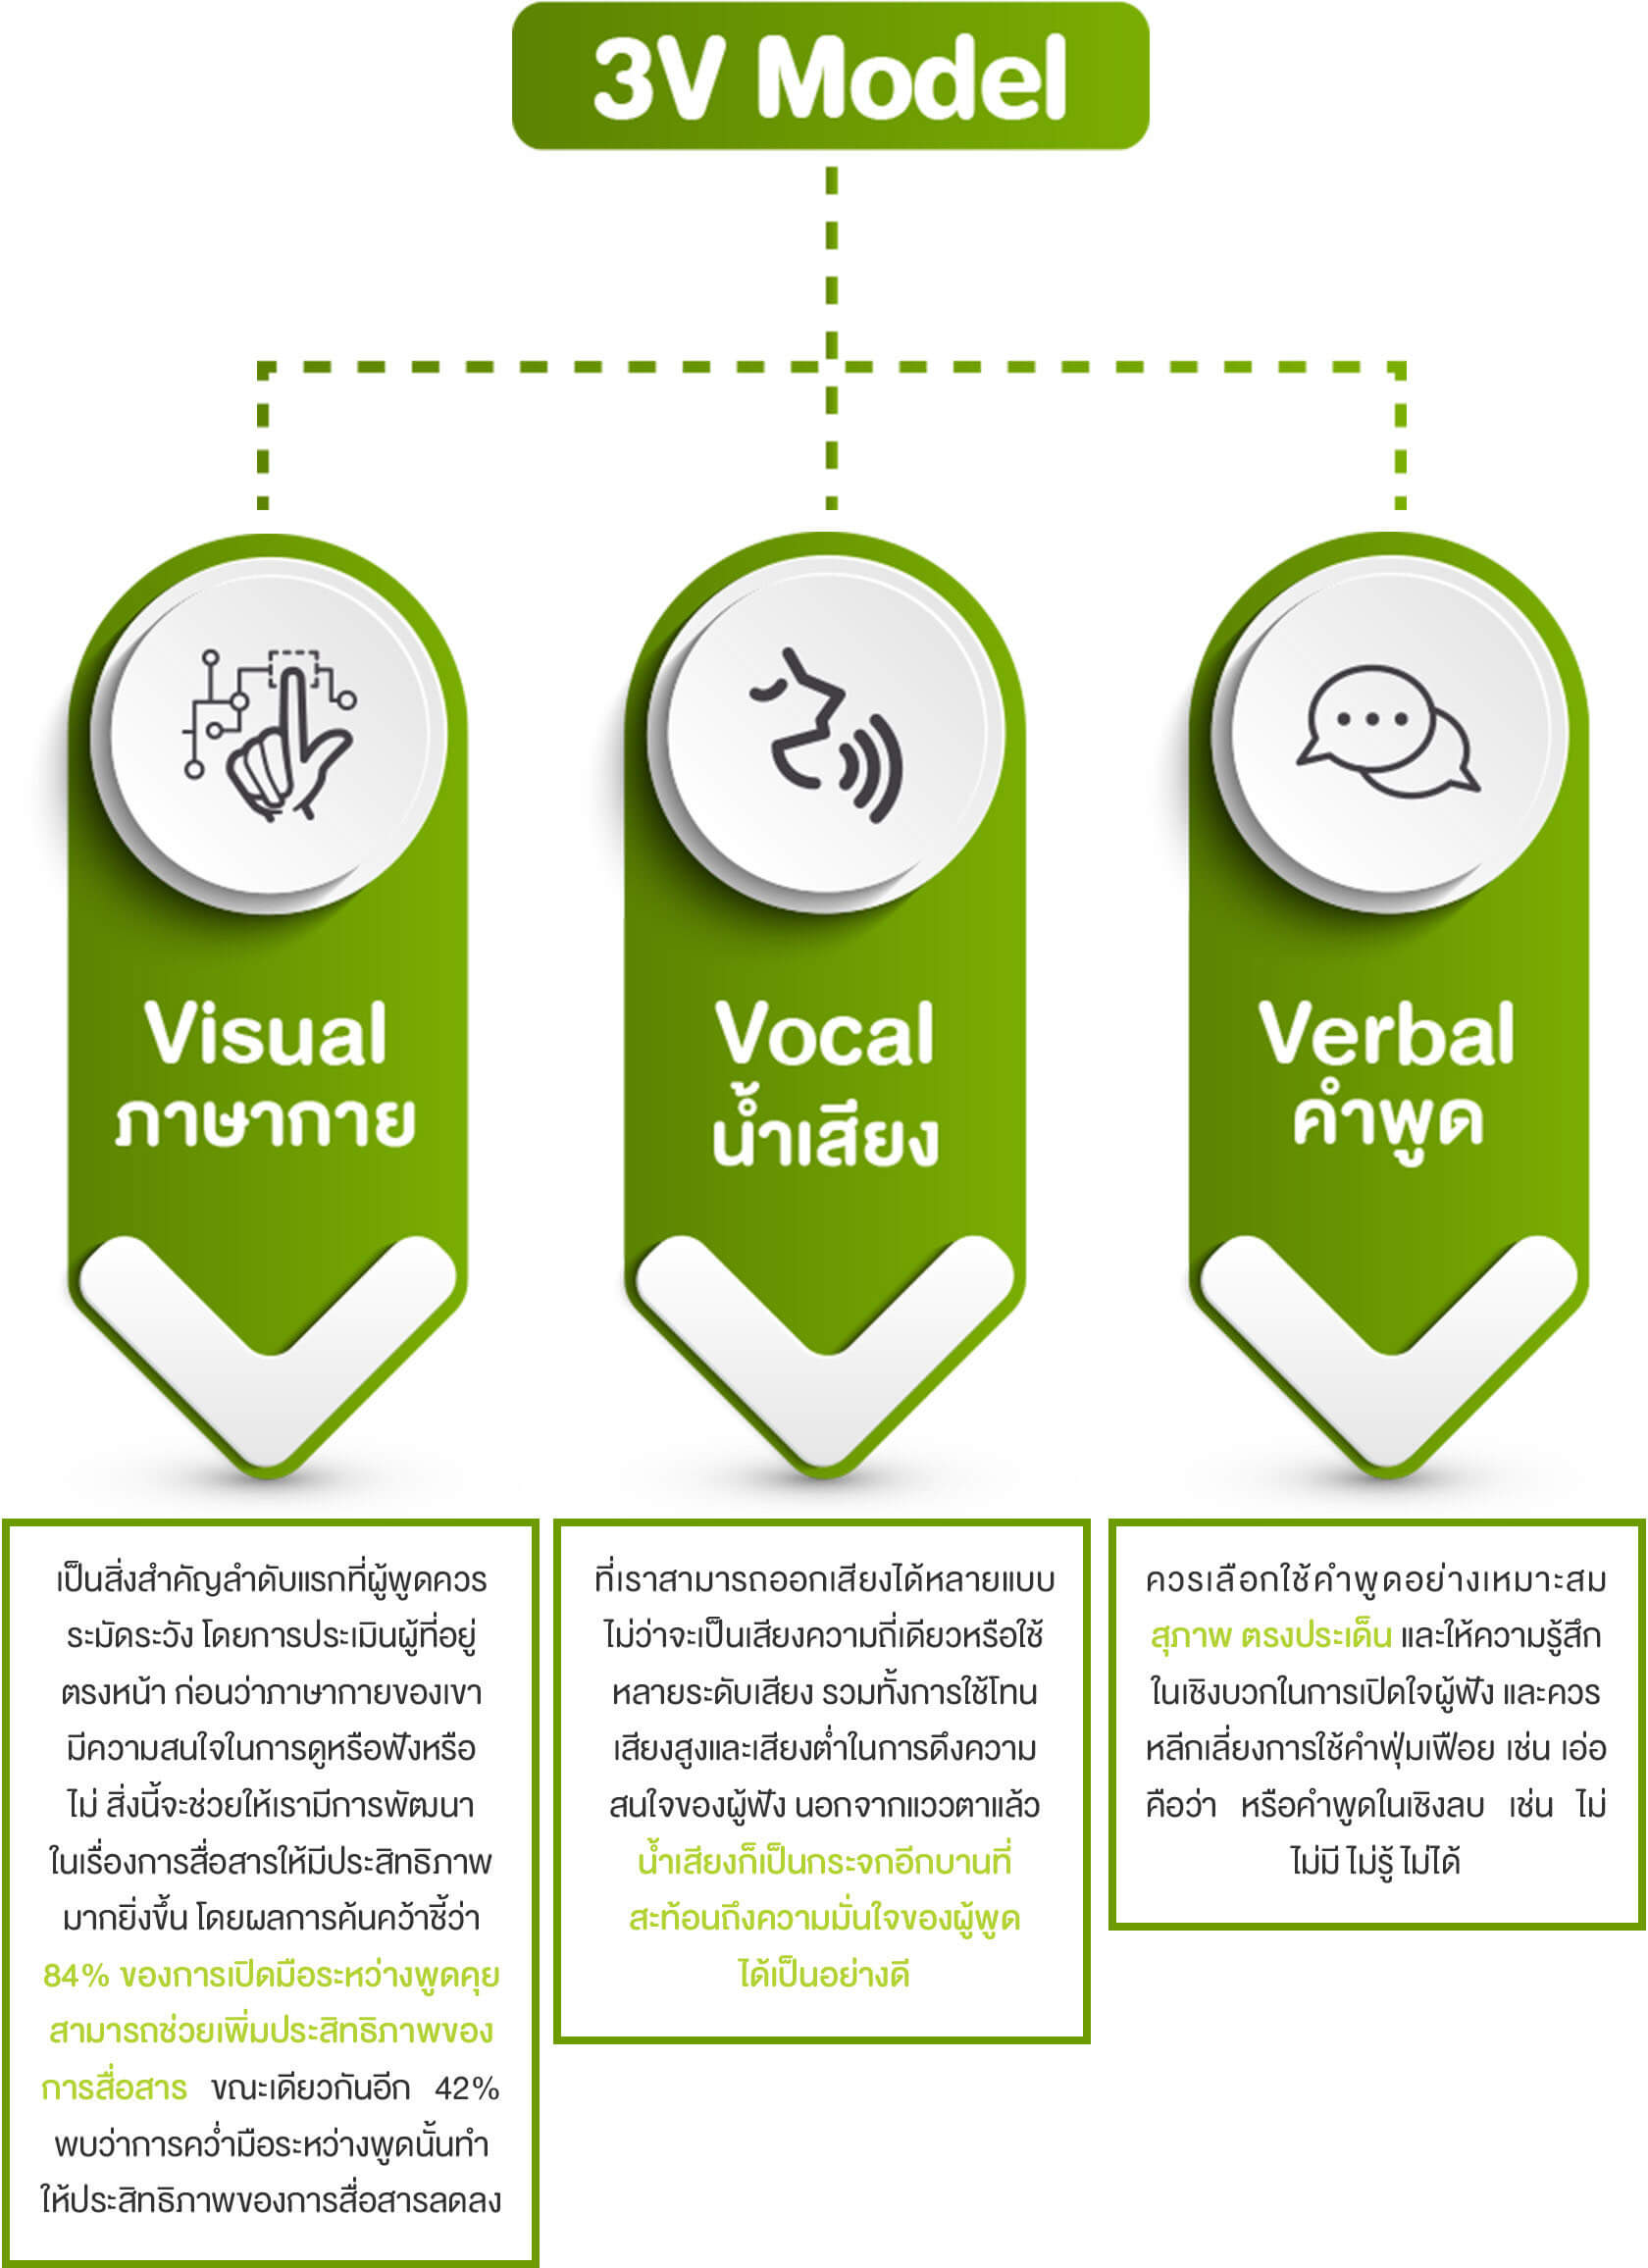 3V Model - Startup Thailand